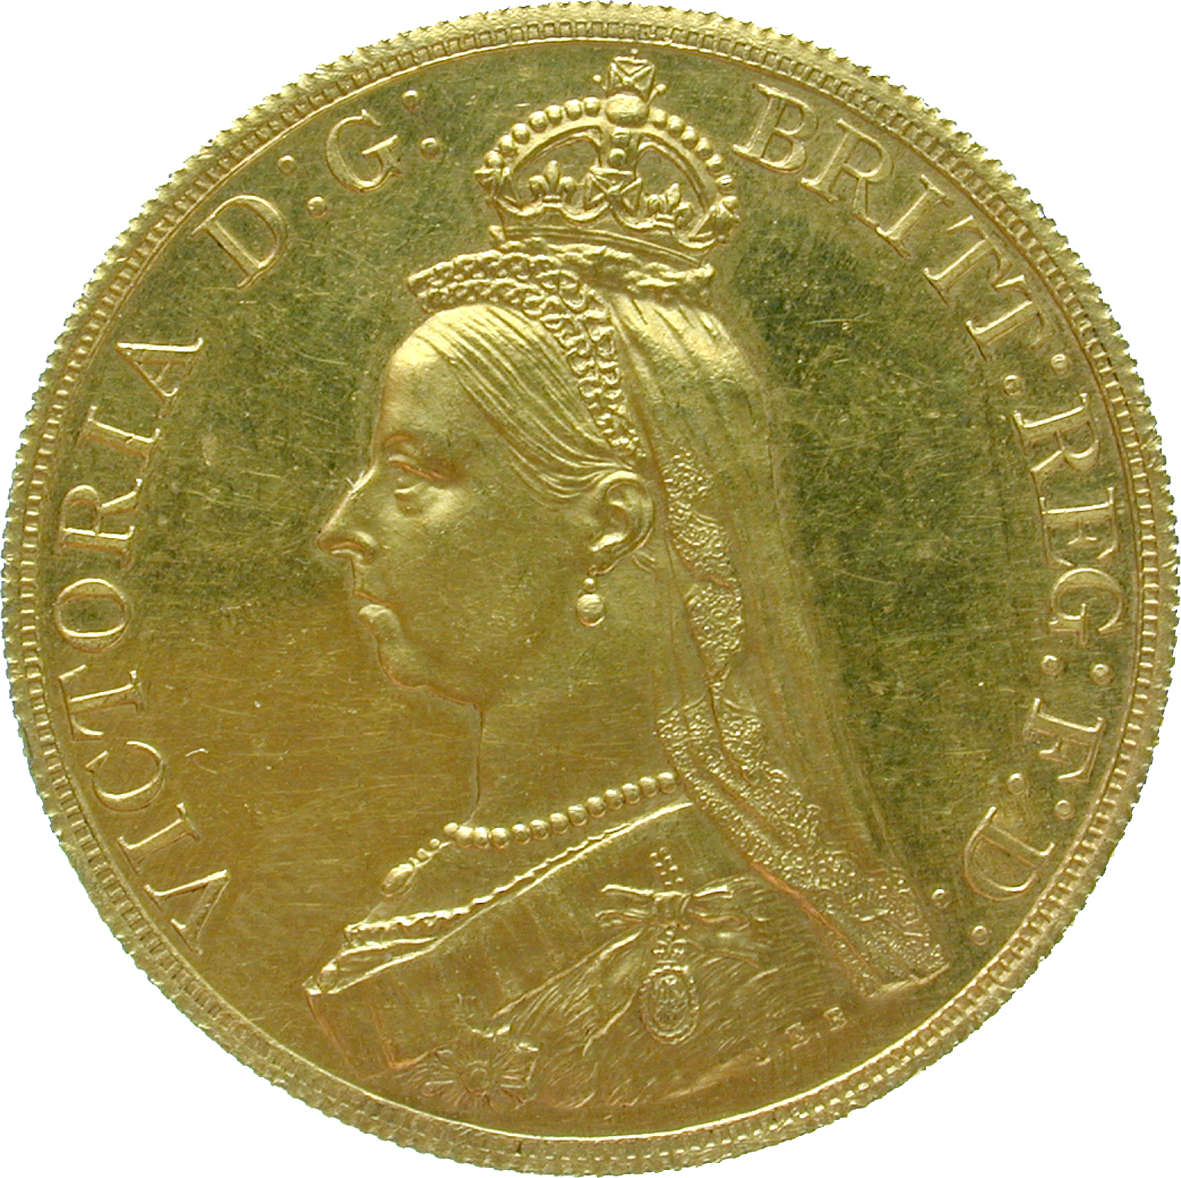 United Kingdom of Great Britain, Victoria, 5 Pounds 1887 (obverse)